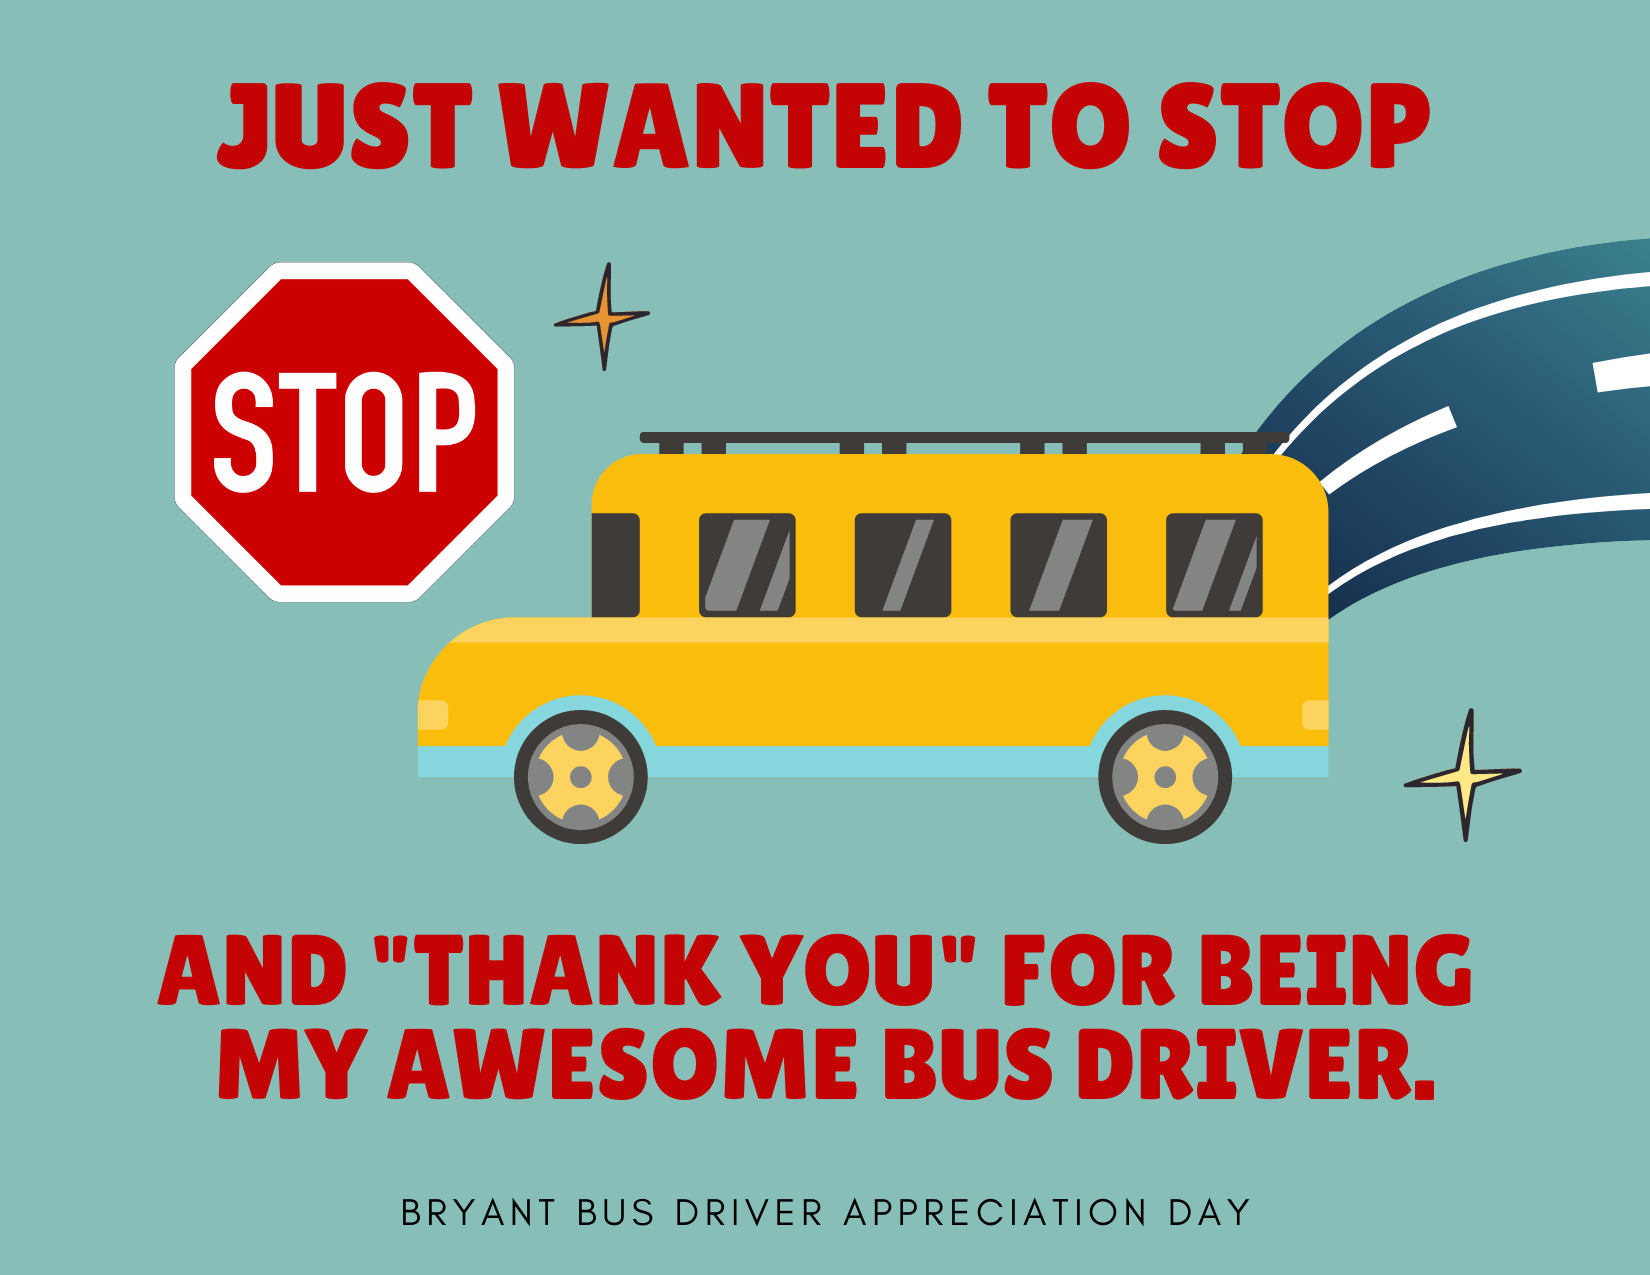 bus-driver-appreciation-day-bryant-public-schools